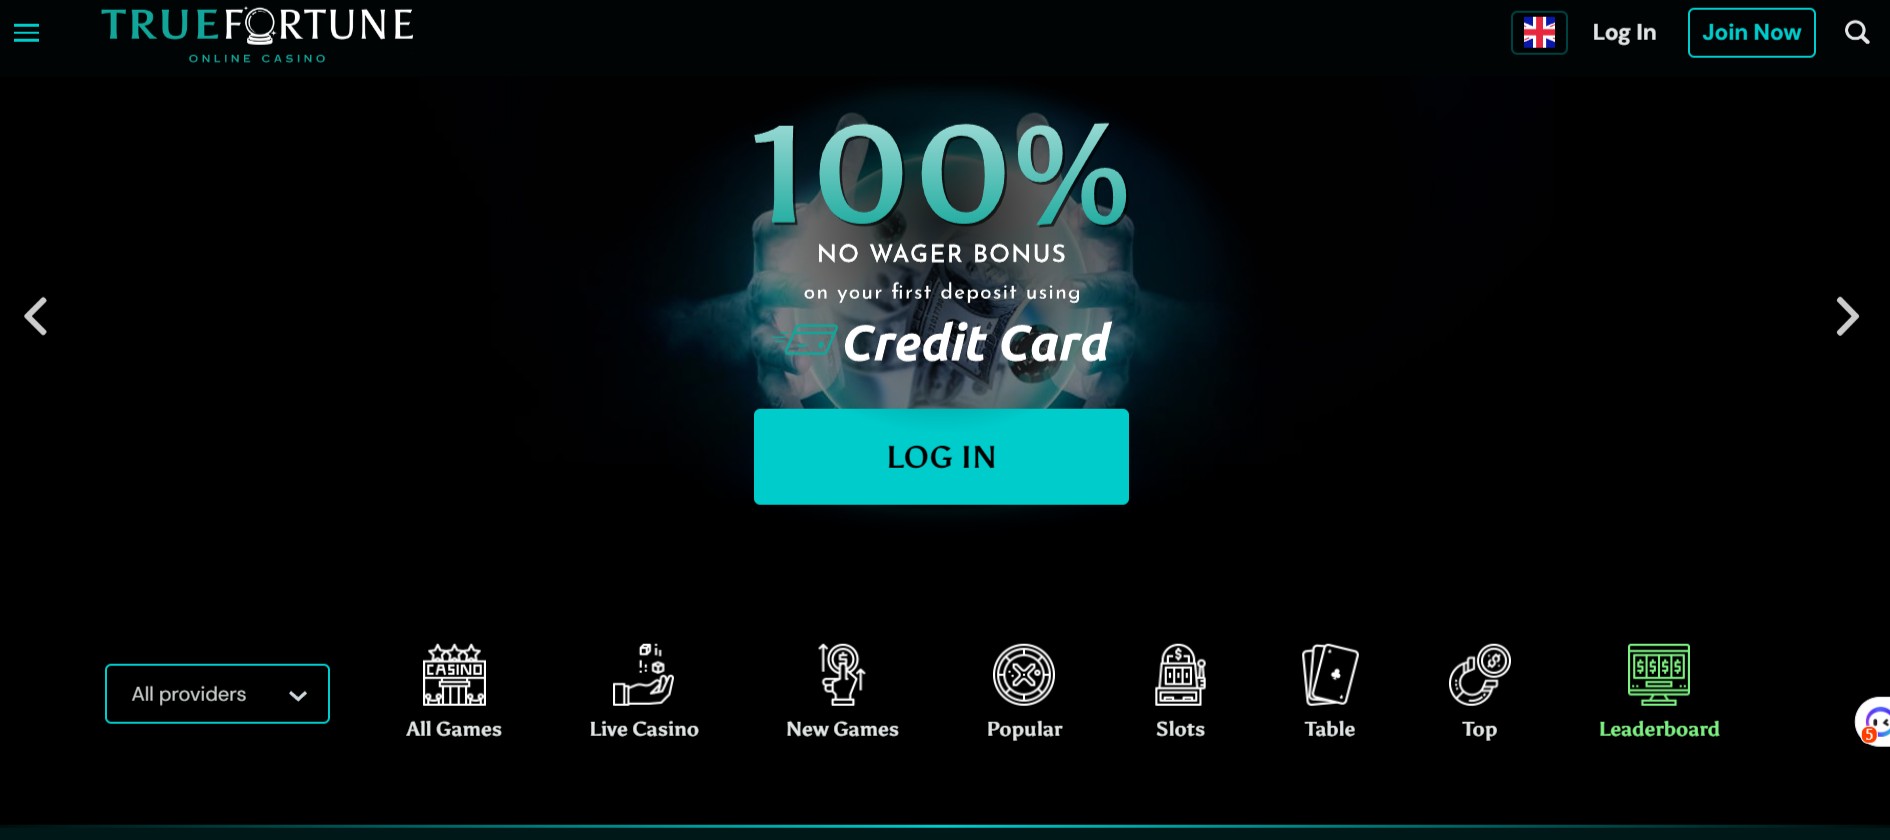 true fortune casino website homepage screenshot